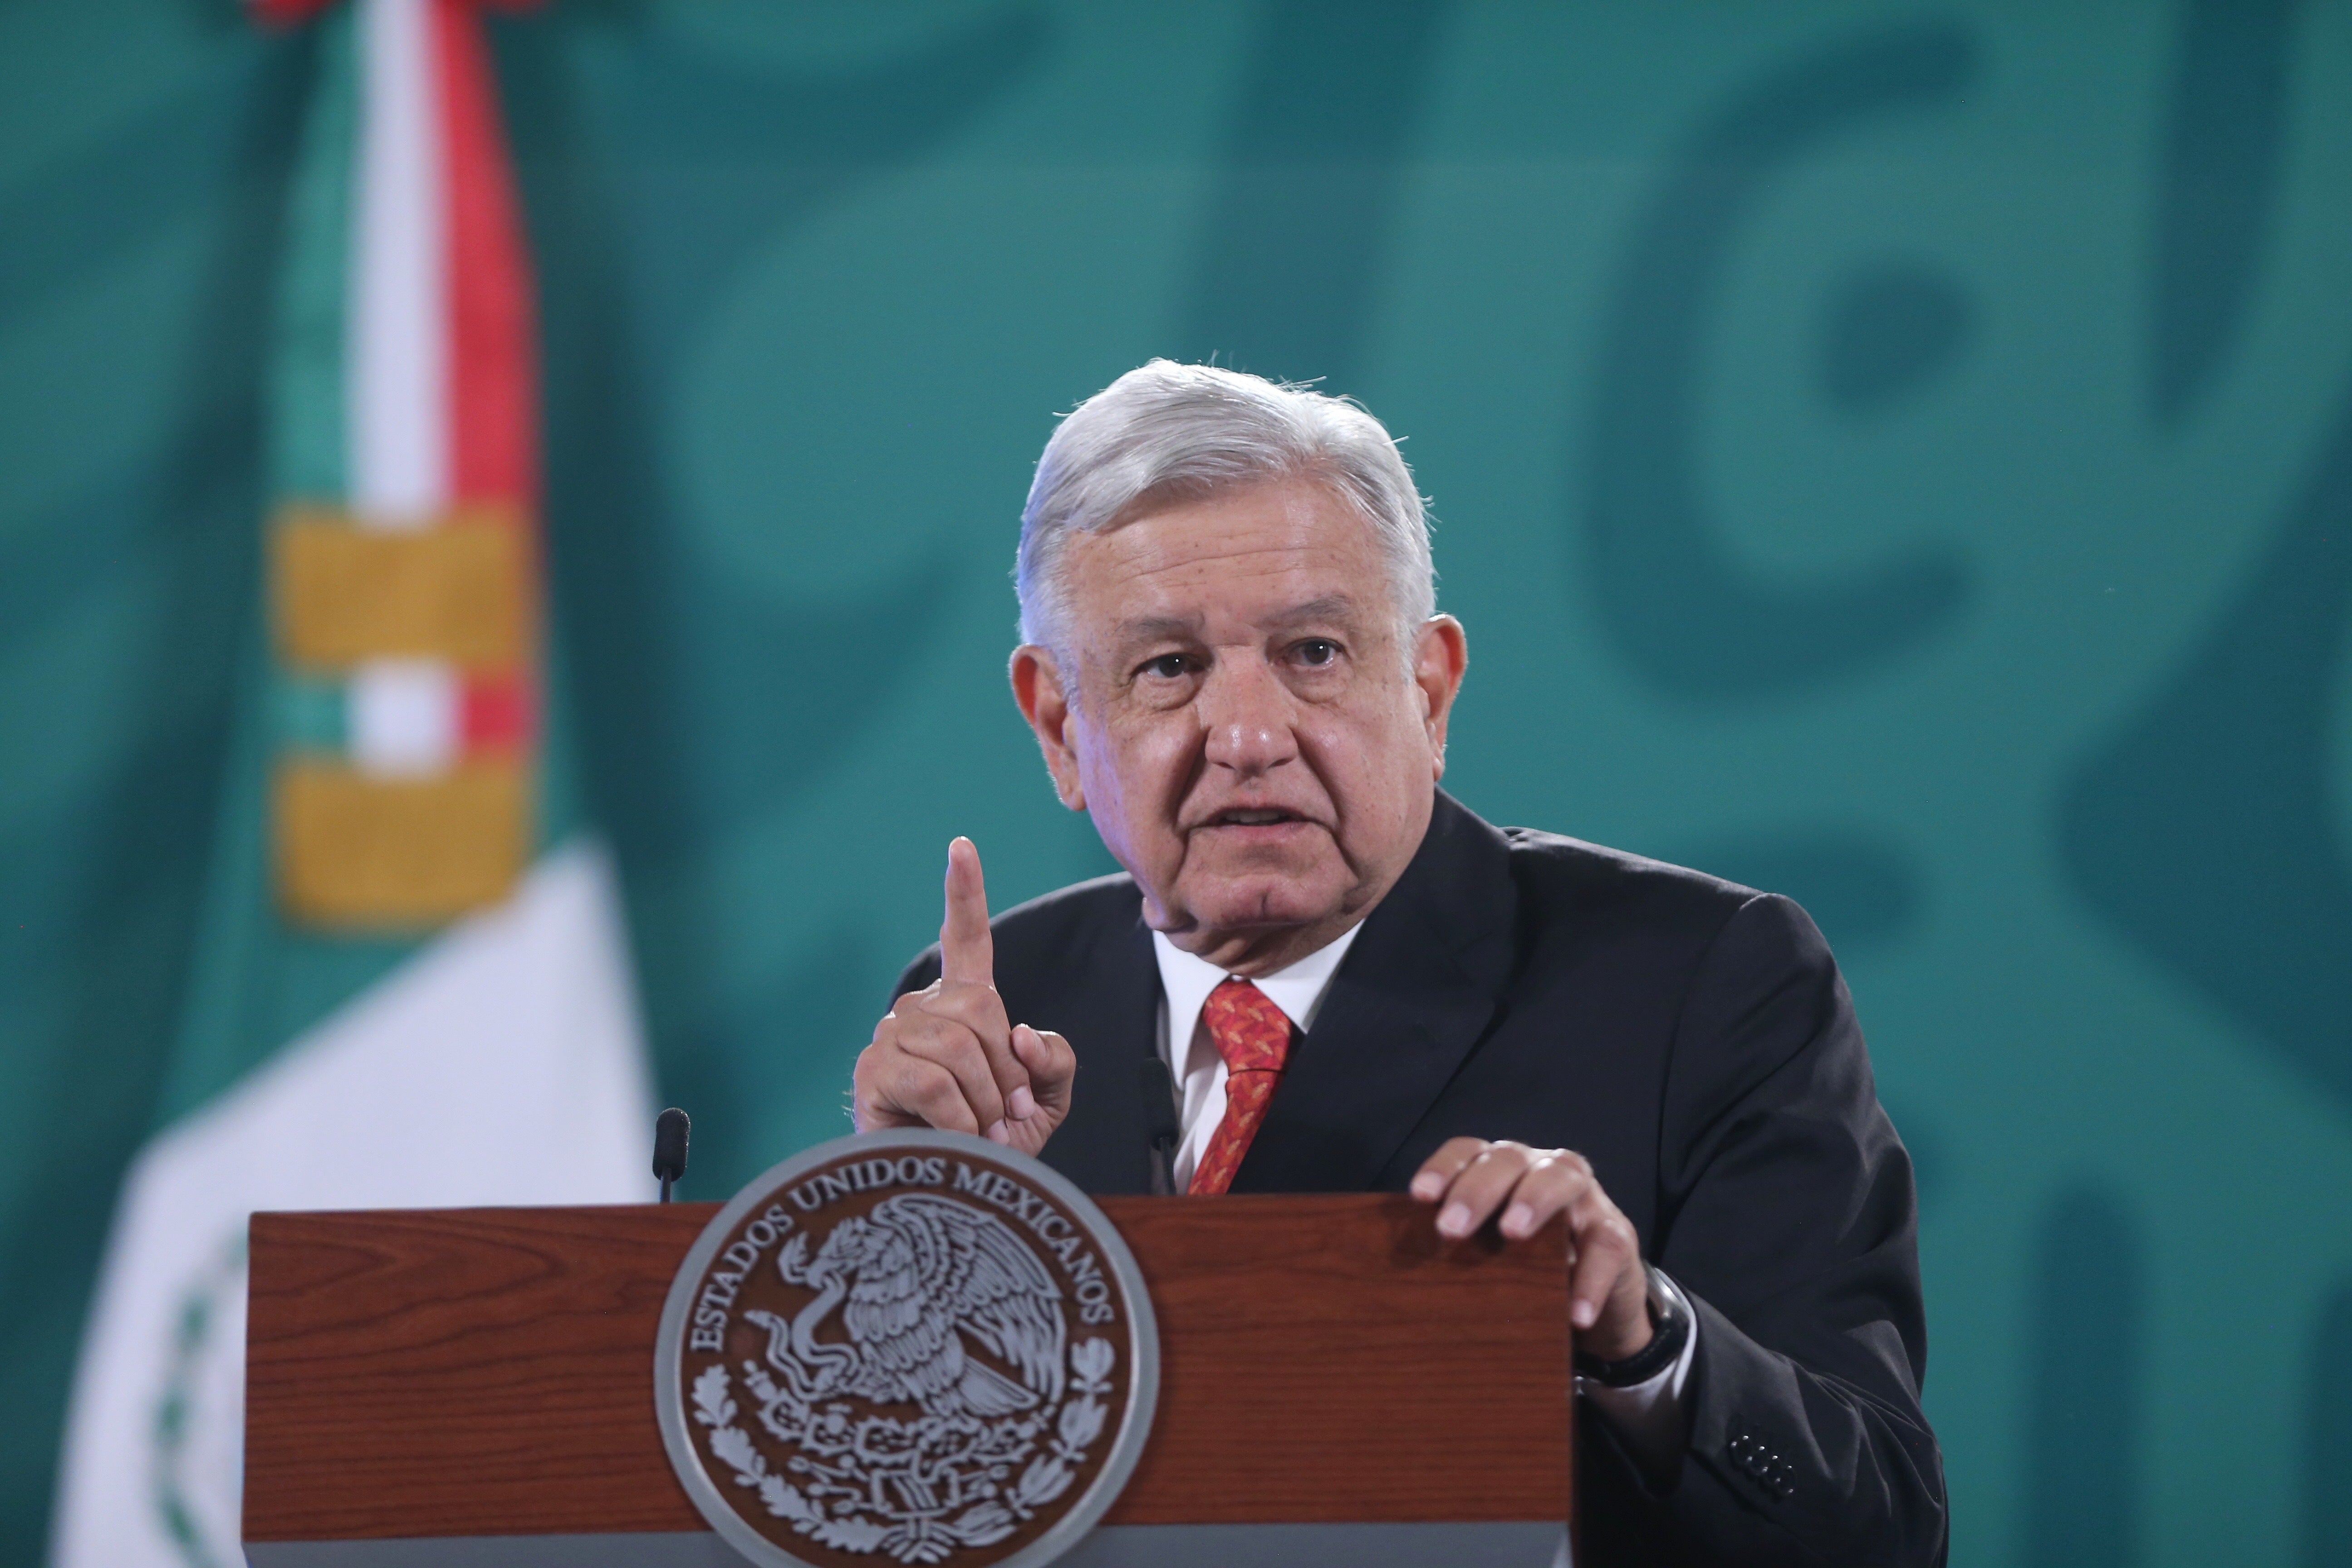 President of Mexico Andres Manuel Lopez Obrador